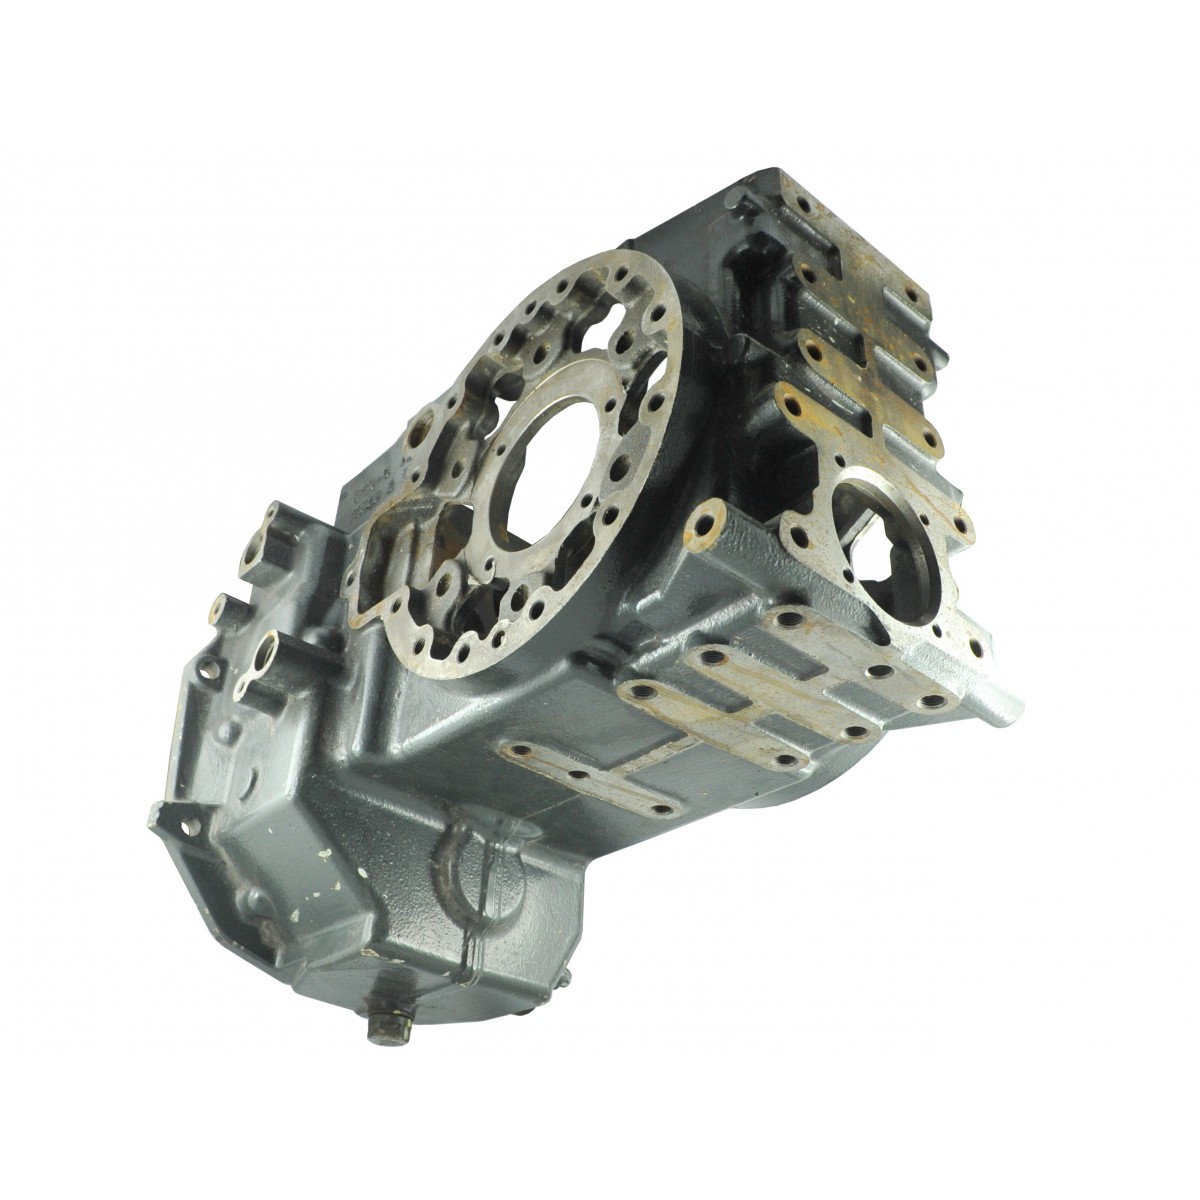 Gearbox, gearbox housing TC432-20408 Kubota L4600DT, E40-C 4C50 2 11